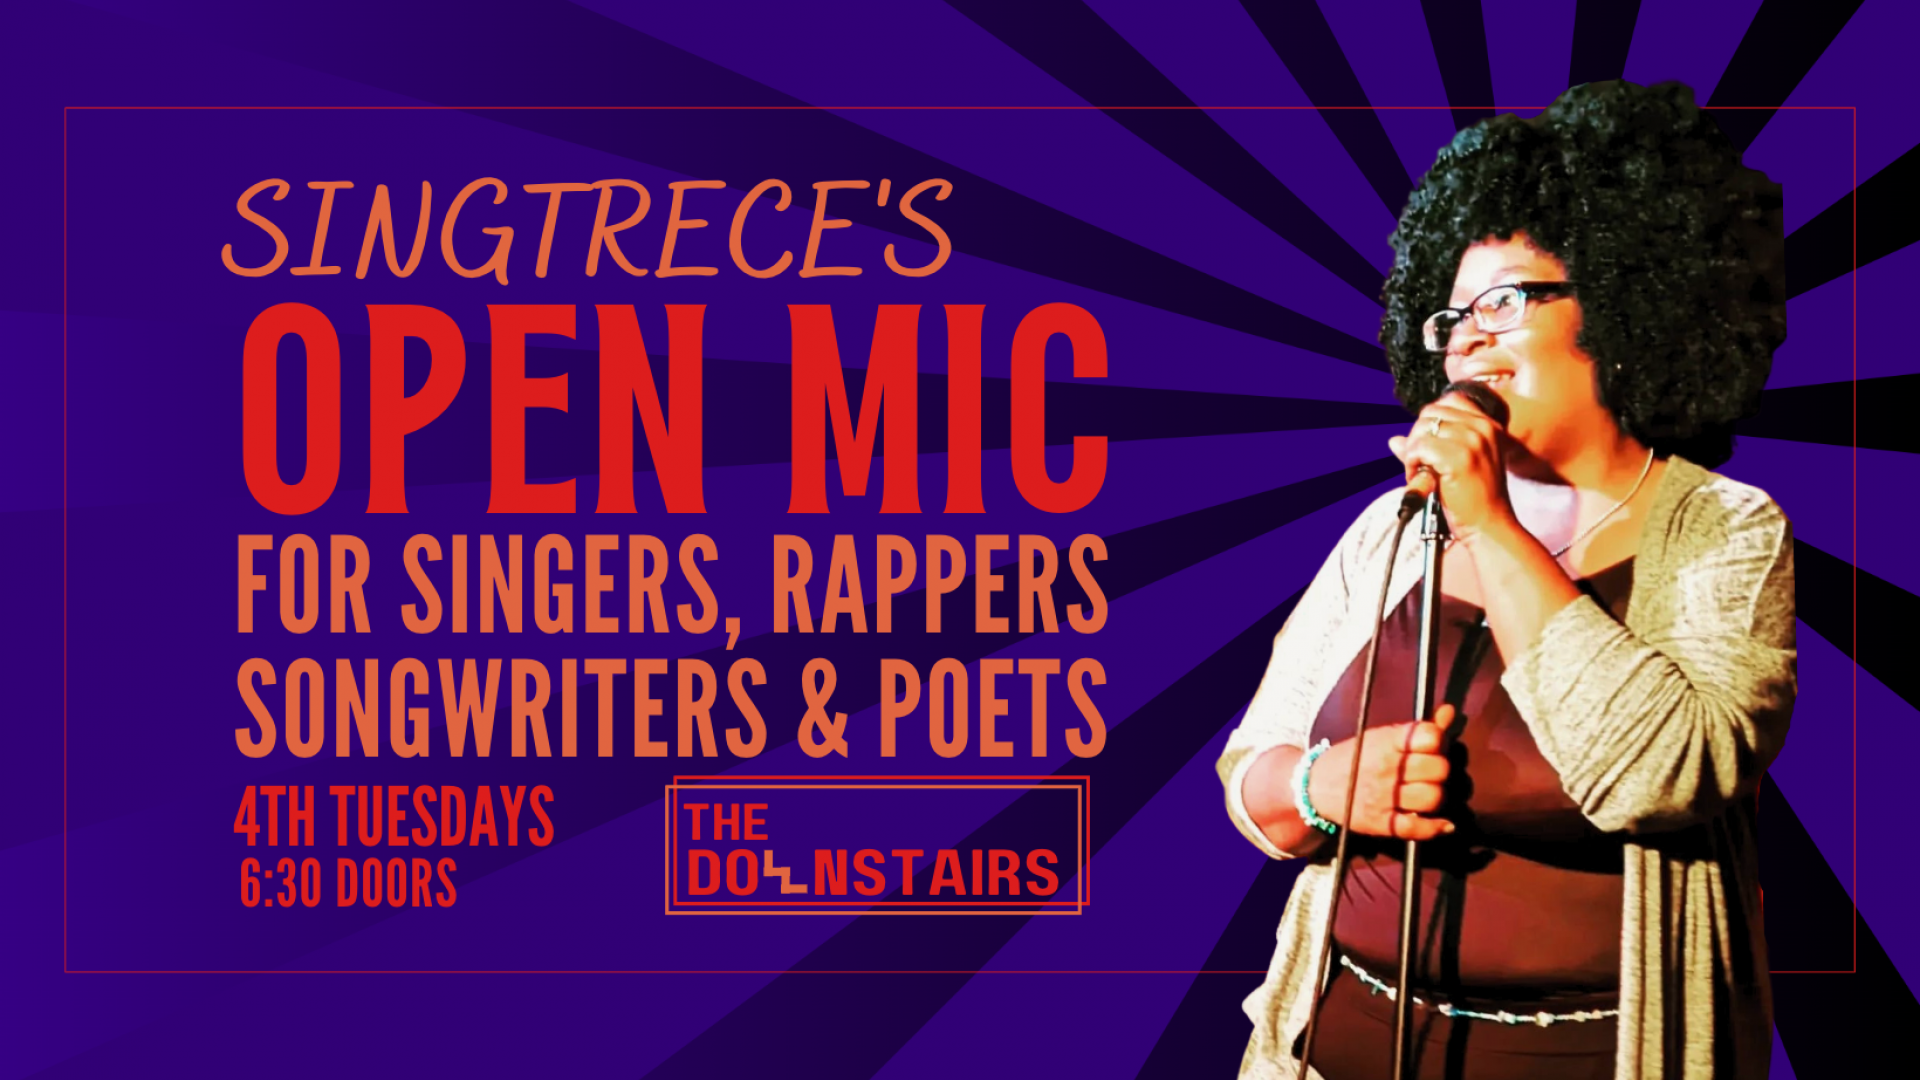 Singtrece's Open Mic for Singers, Rappers, Songwriters & Poets